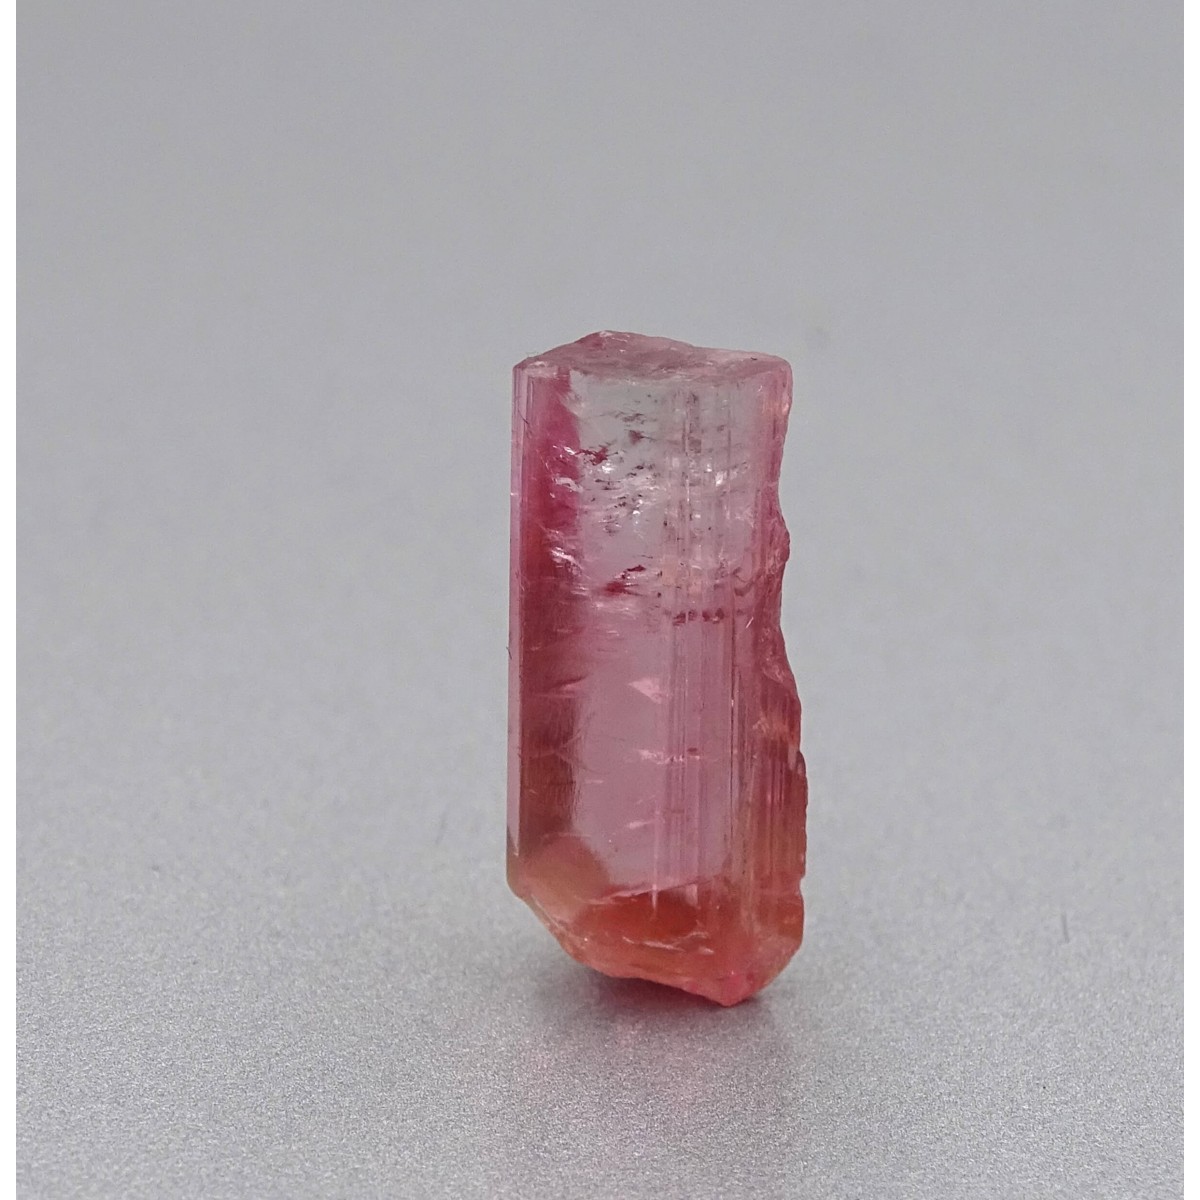 Tourmaline pink natural crystal 2.4g, Afghanistan